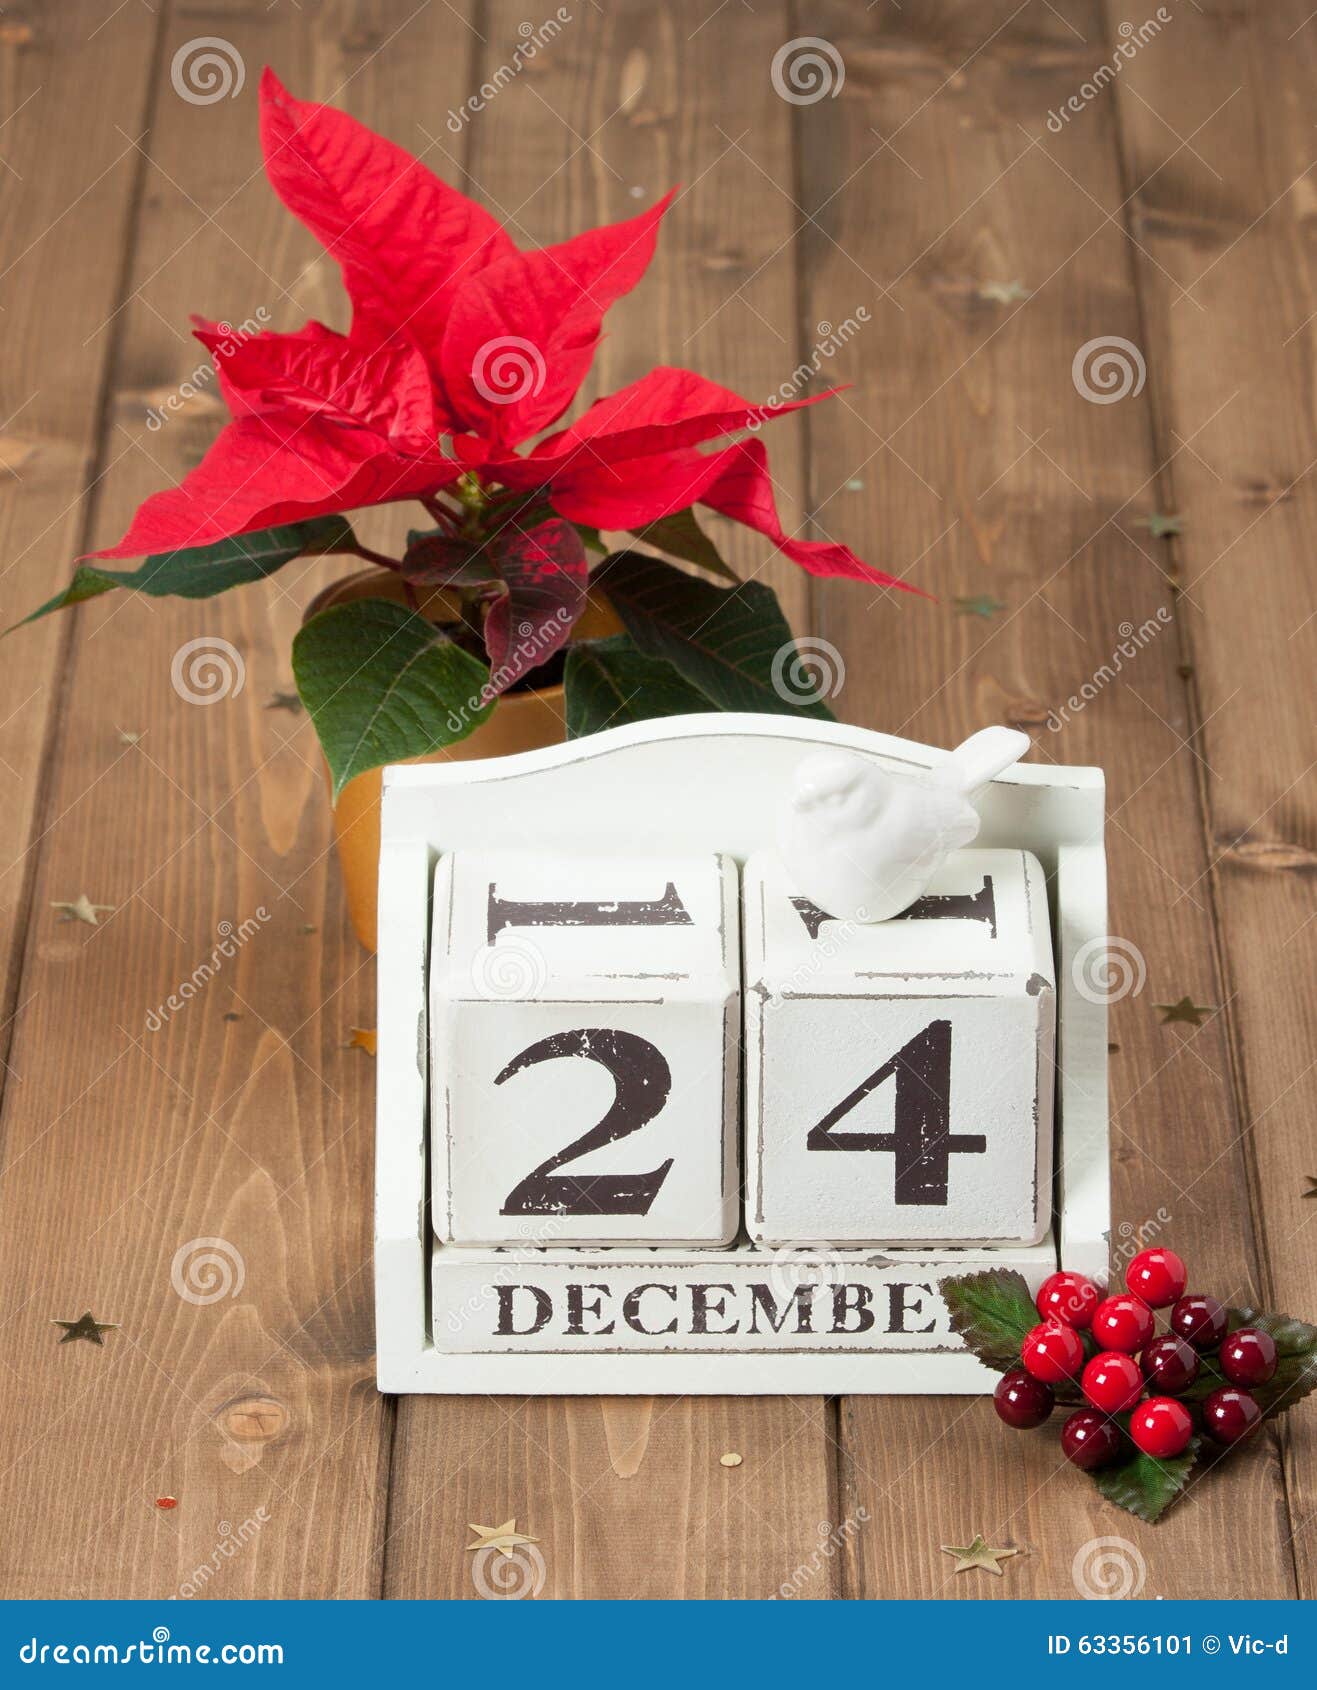 Christmas Eve Date On Calendar. December 24 Stock Image - Image of cube, noel: 63356101